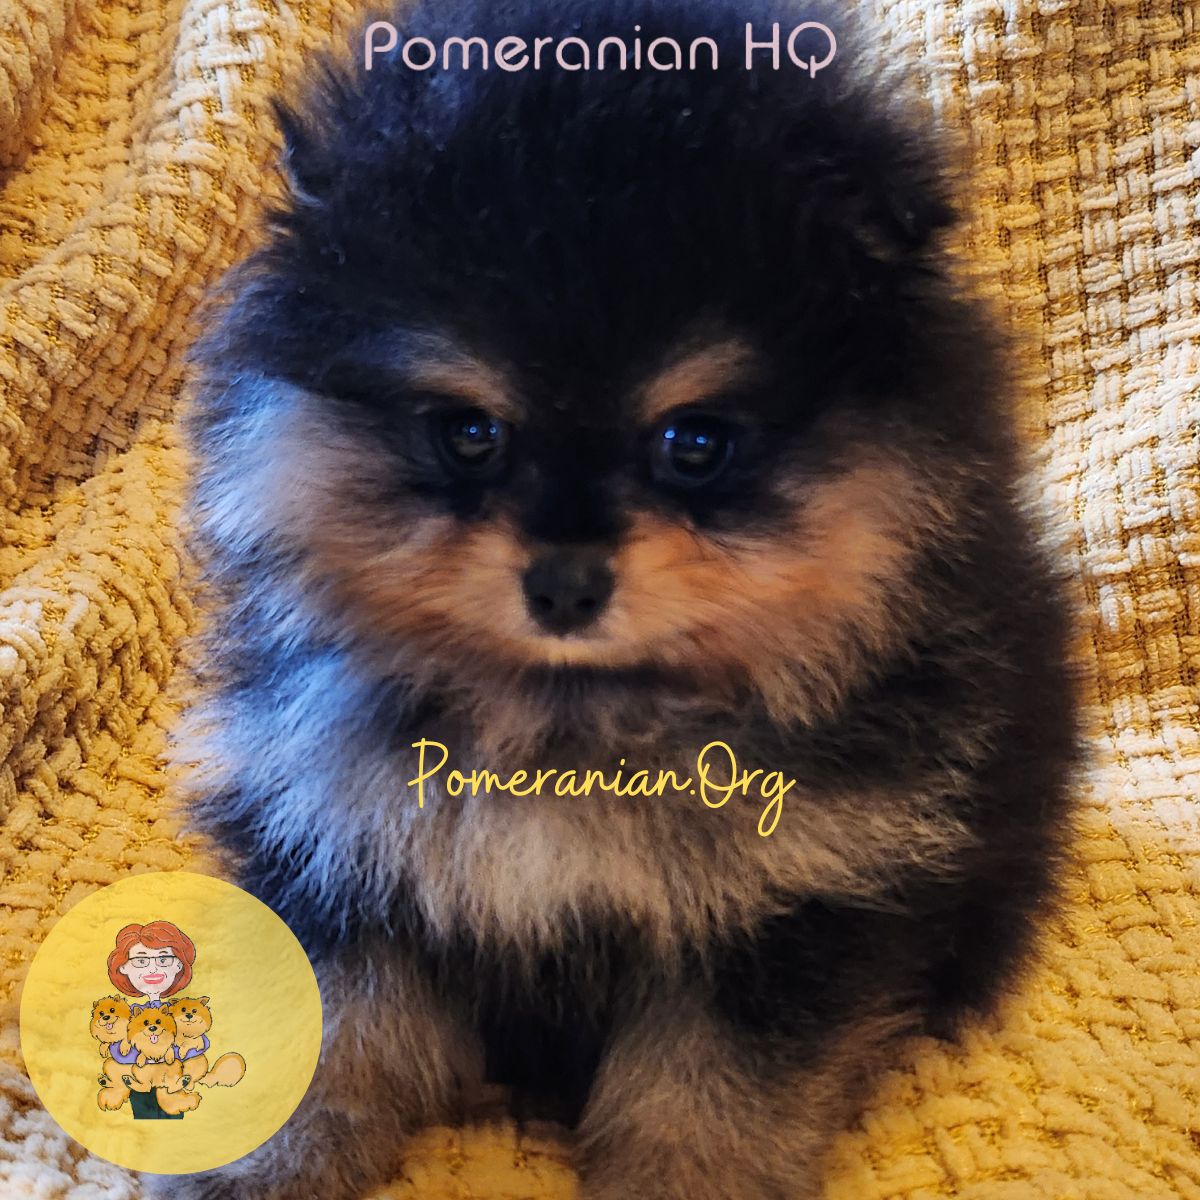 Black and Tan Pomeranian Puppy